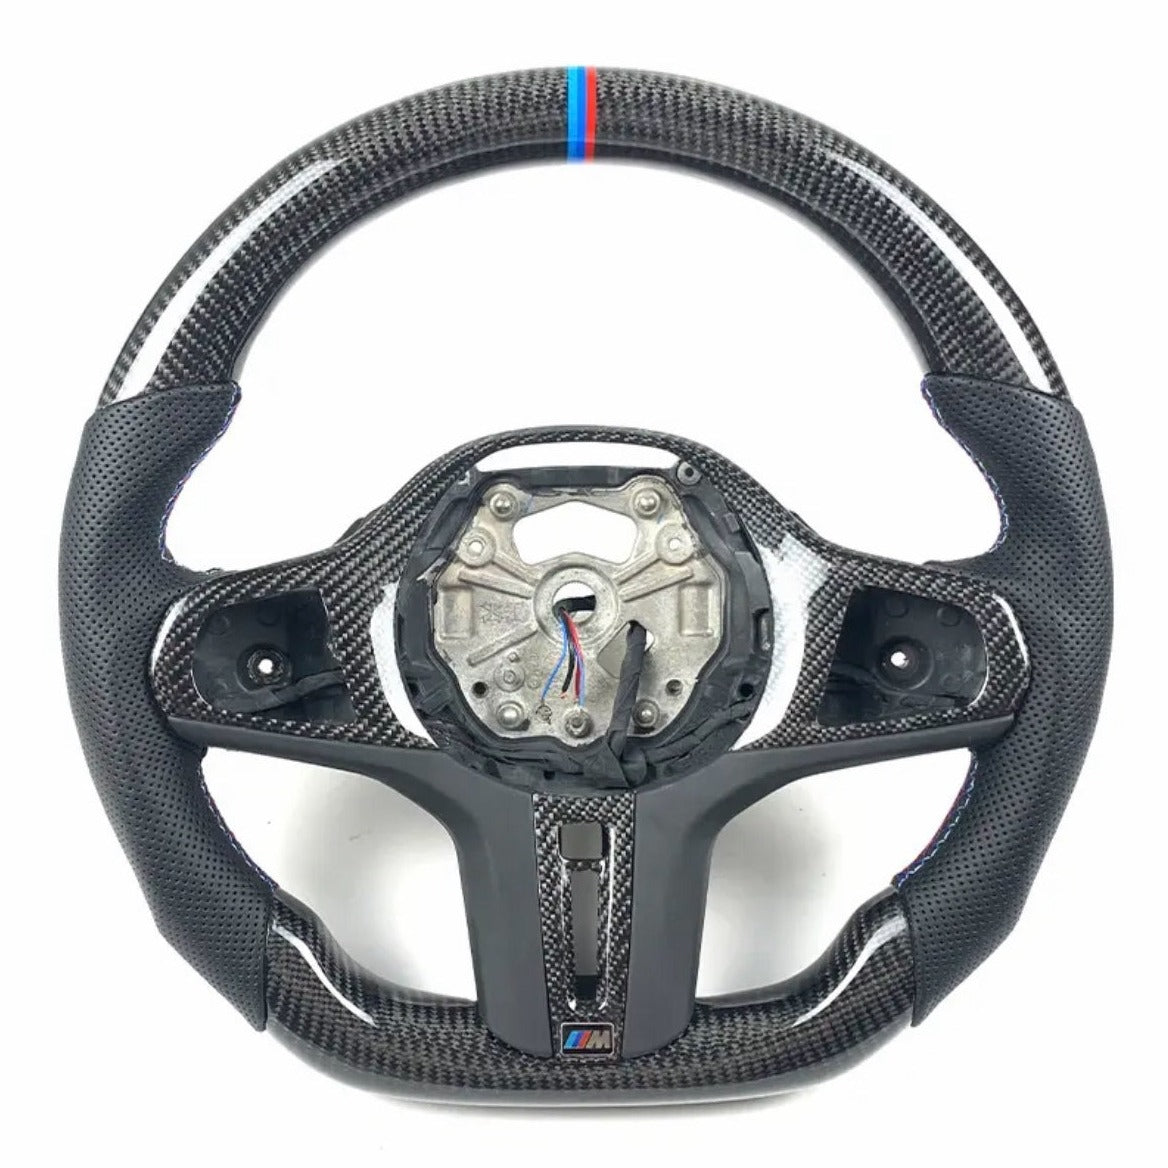 Carbon steering wheel for BMW G models